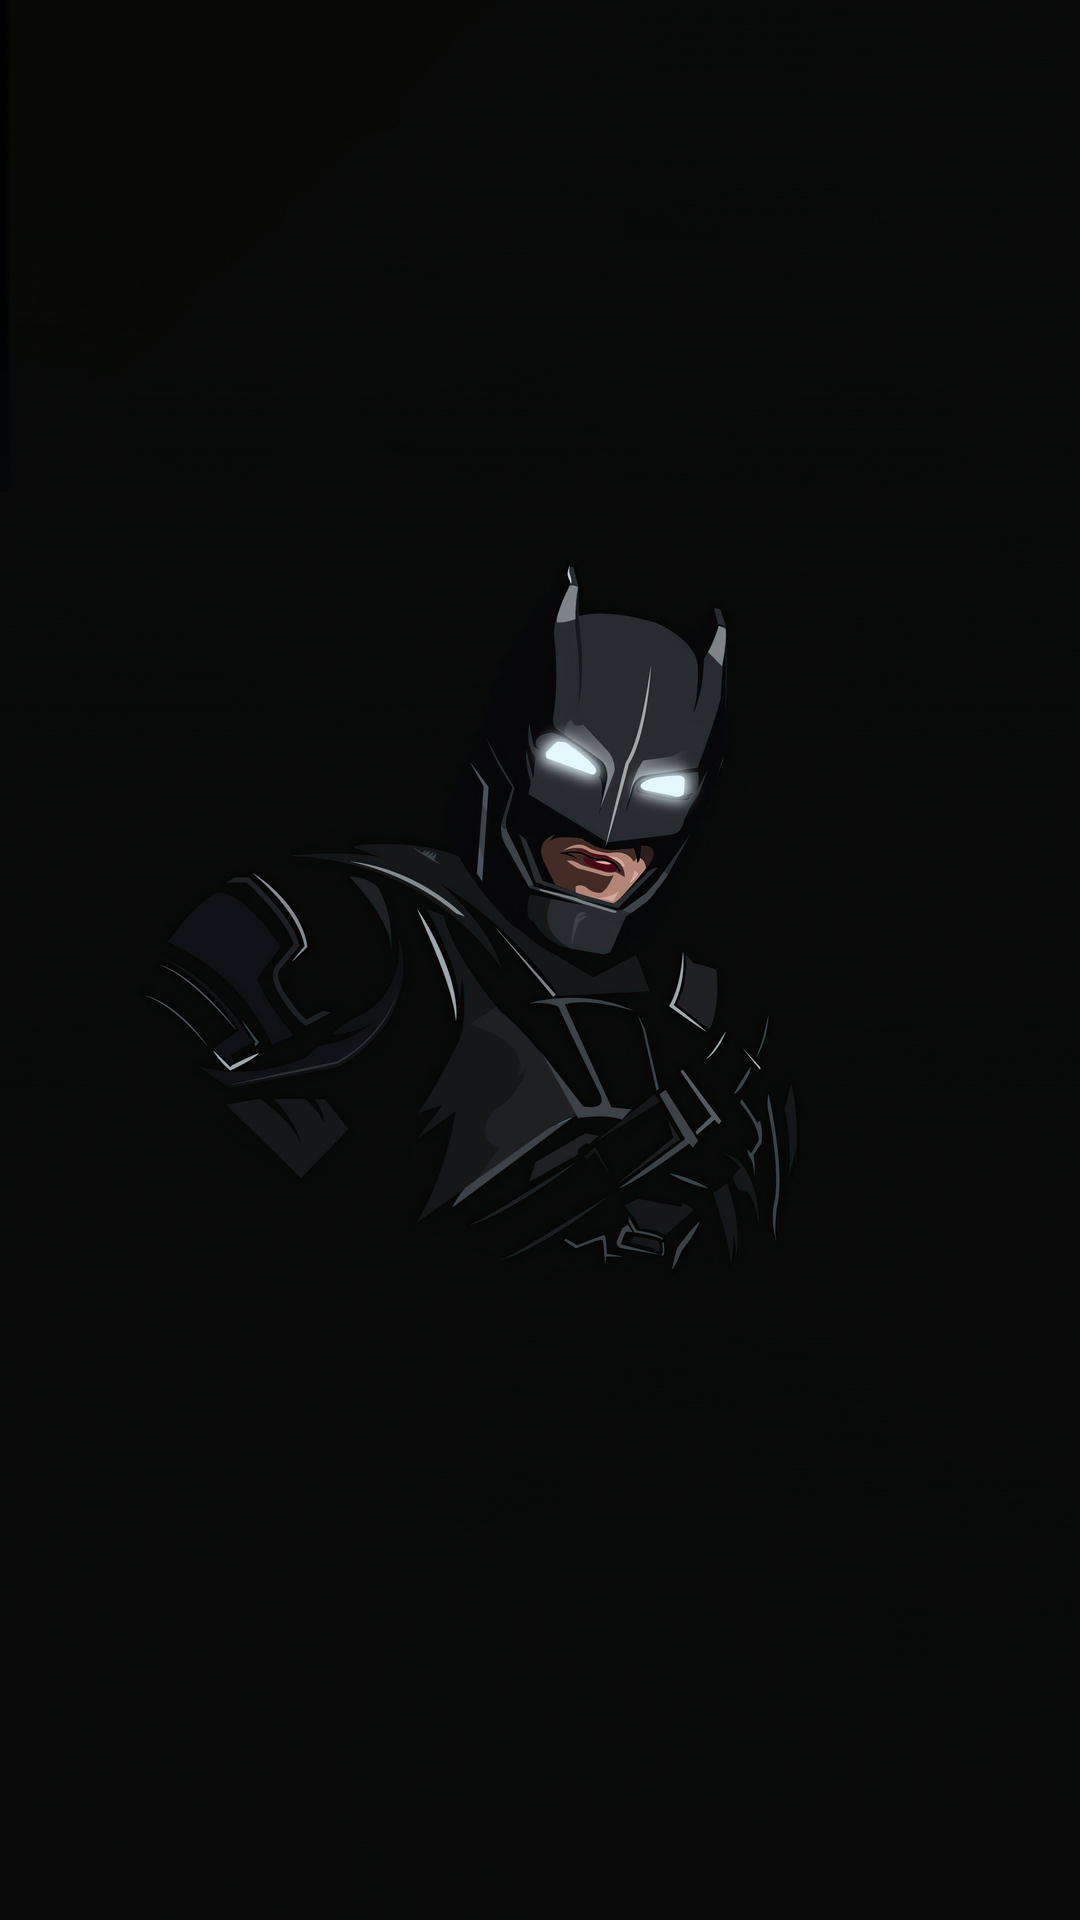 4k Batman For iPhone Wallpapers  Wallpaper Cave